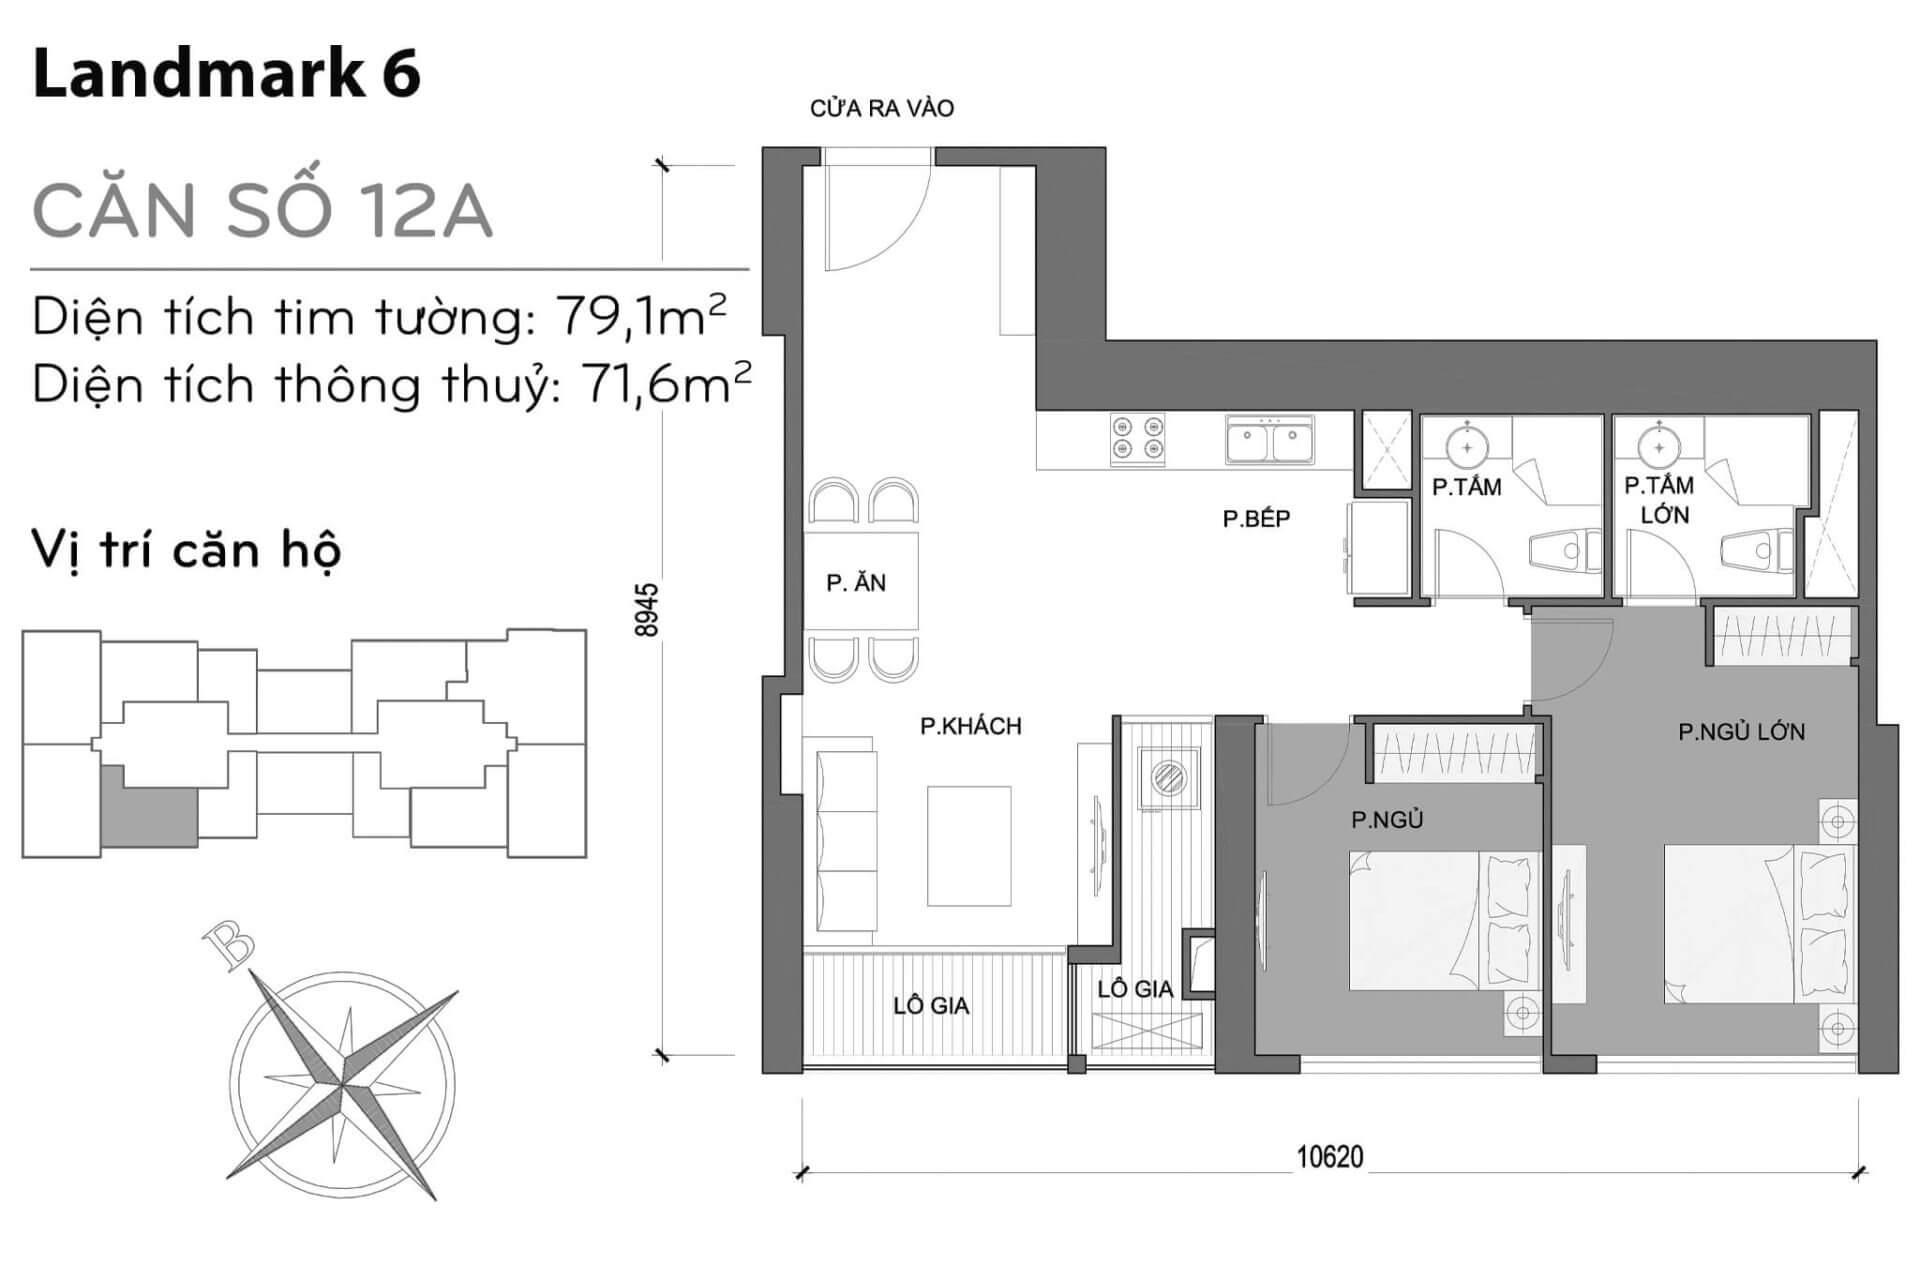 layout căn hộ số 12A Landmark 6 L6-12A